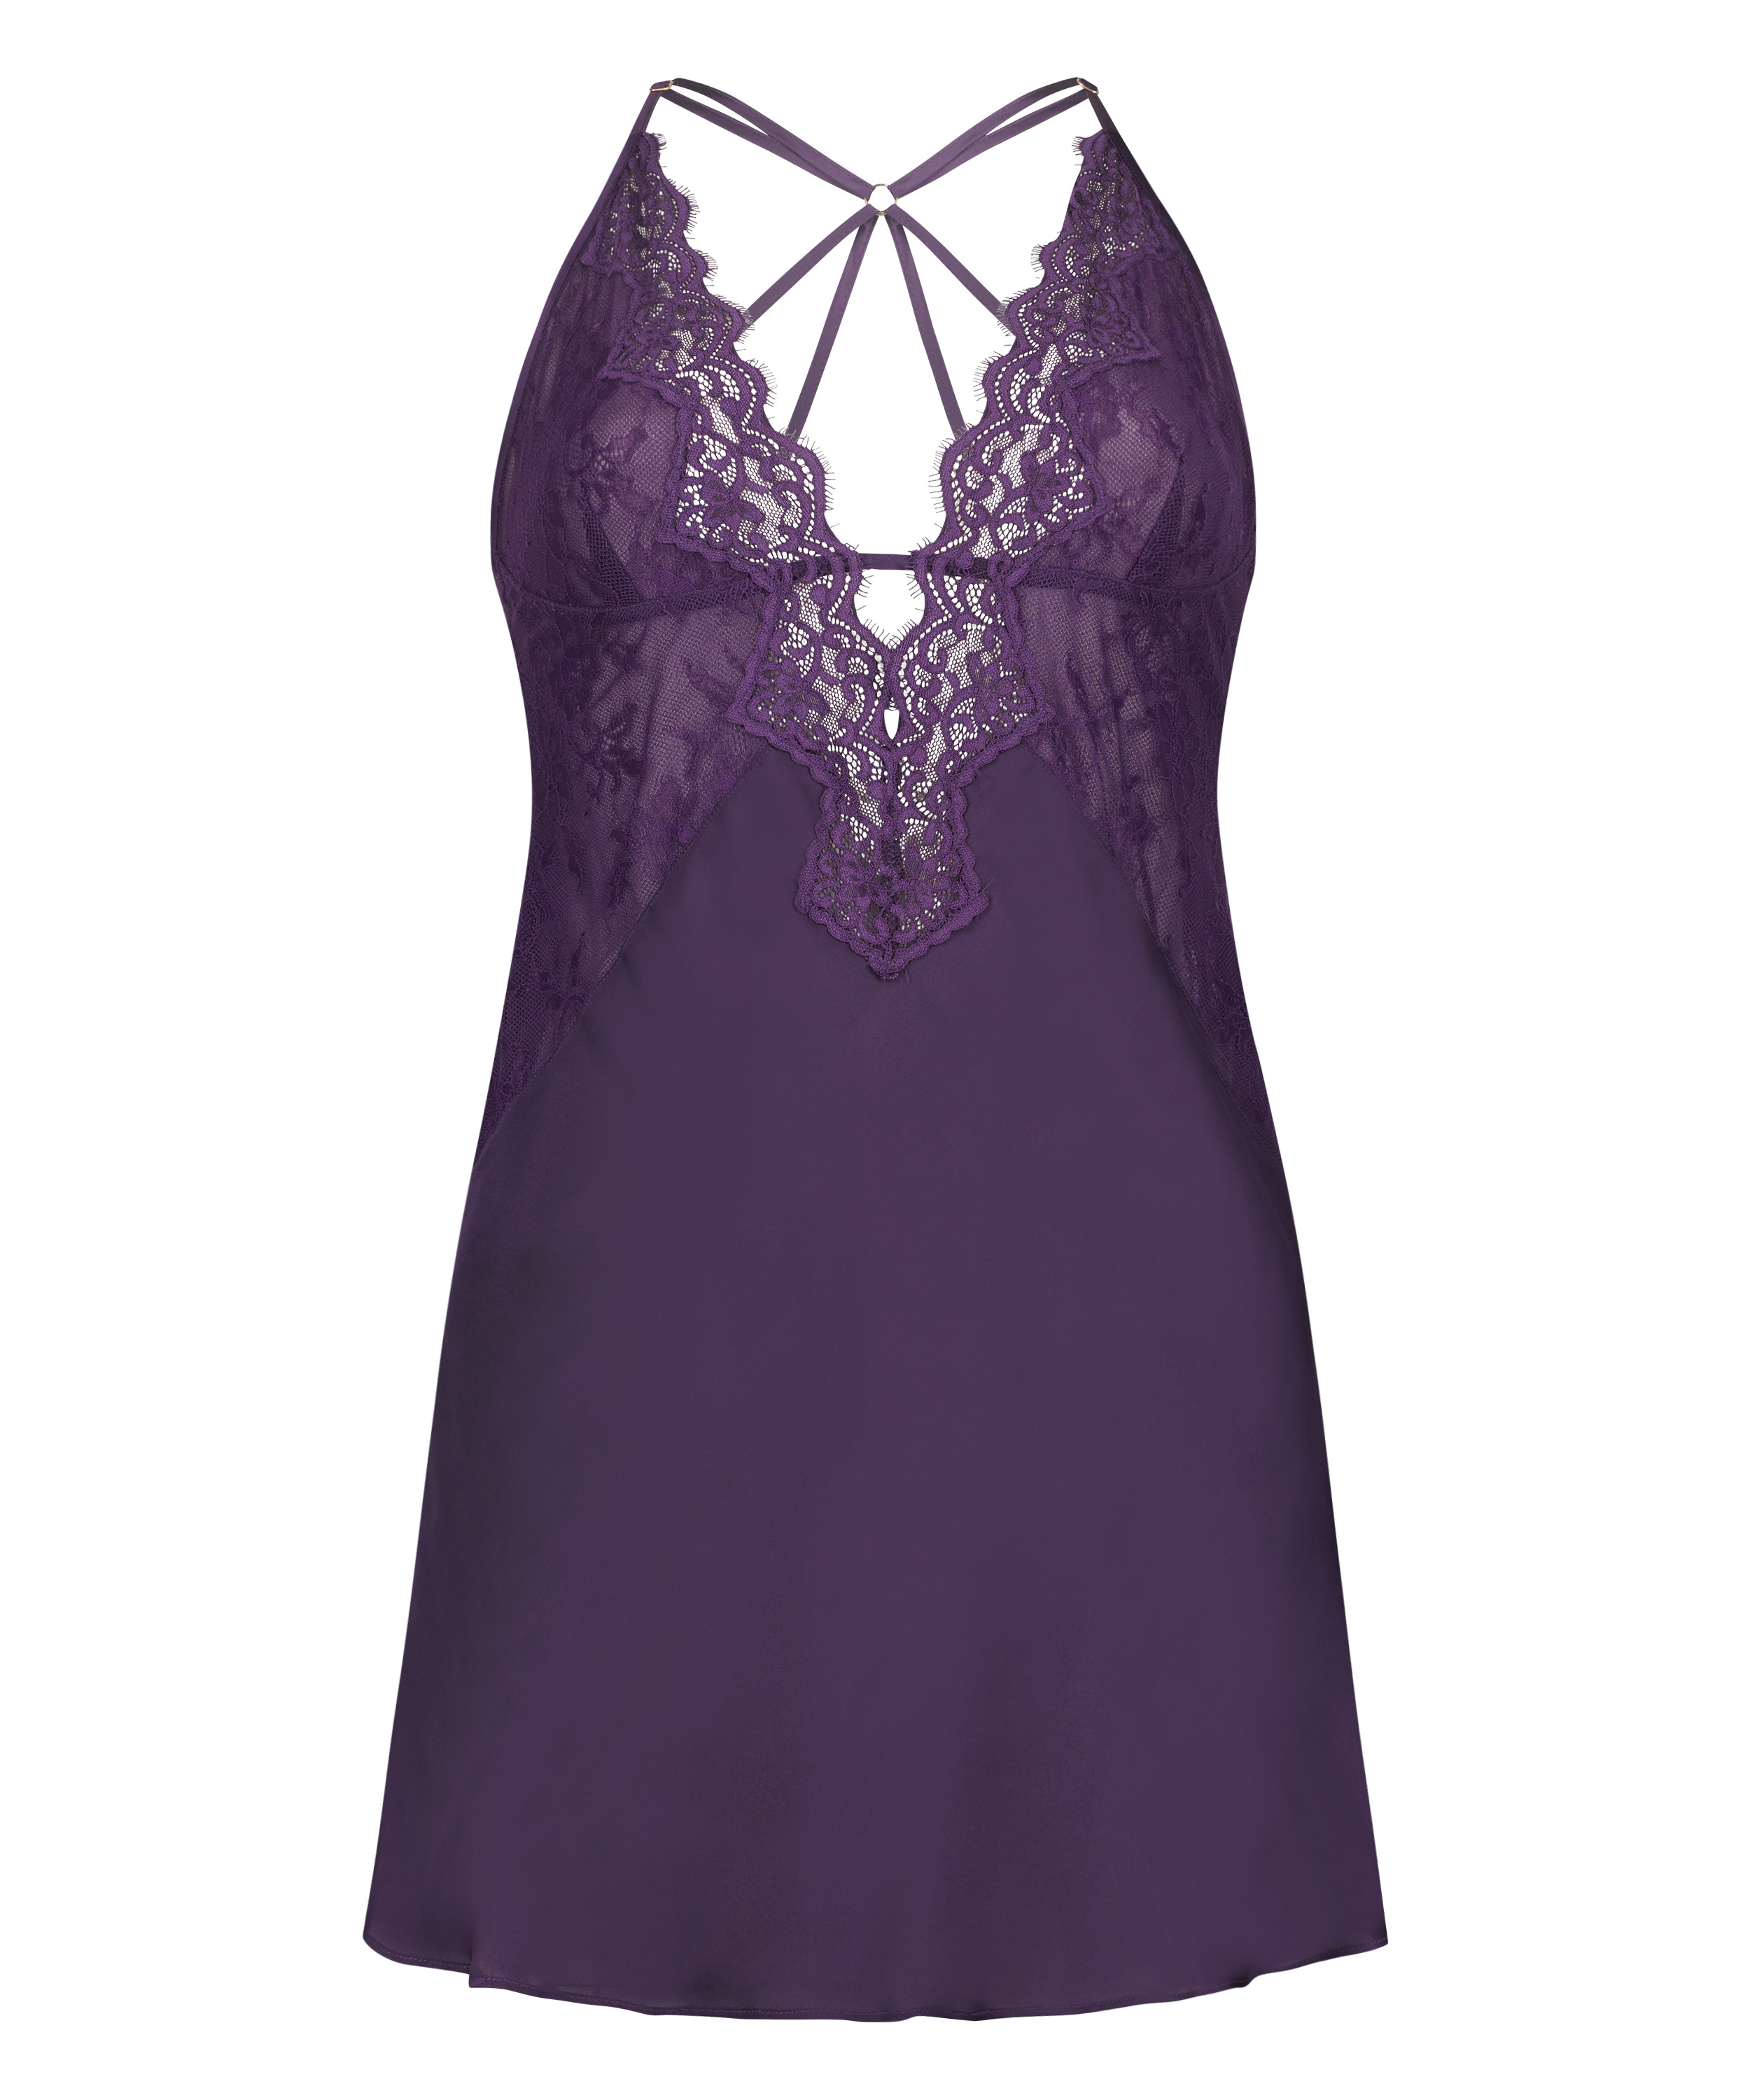 Sienna Lace Slip Dress, Purple, main